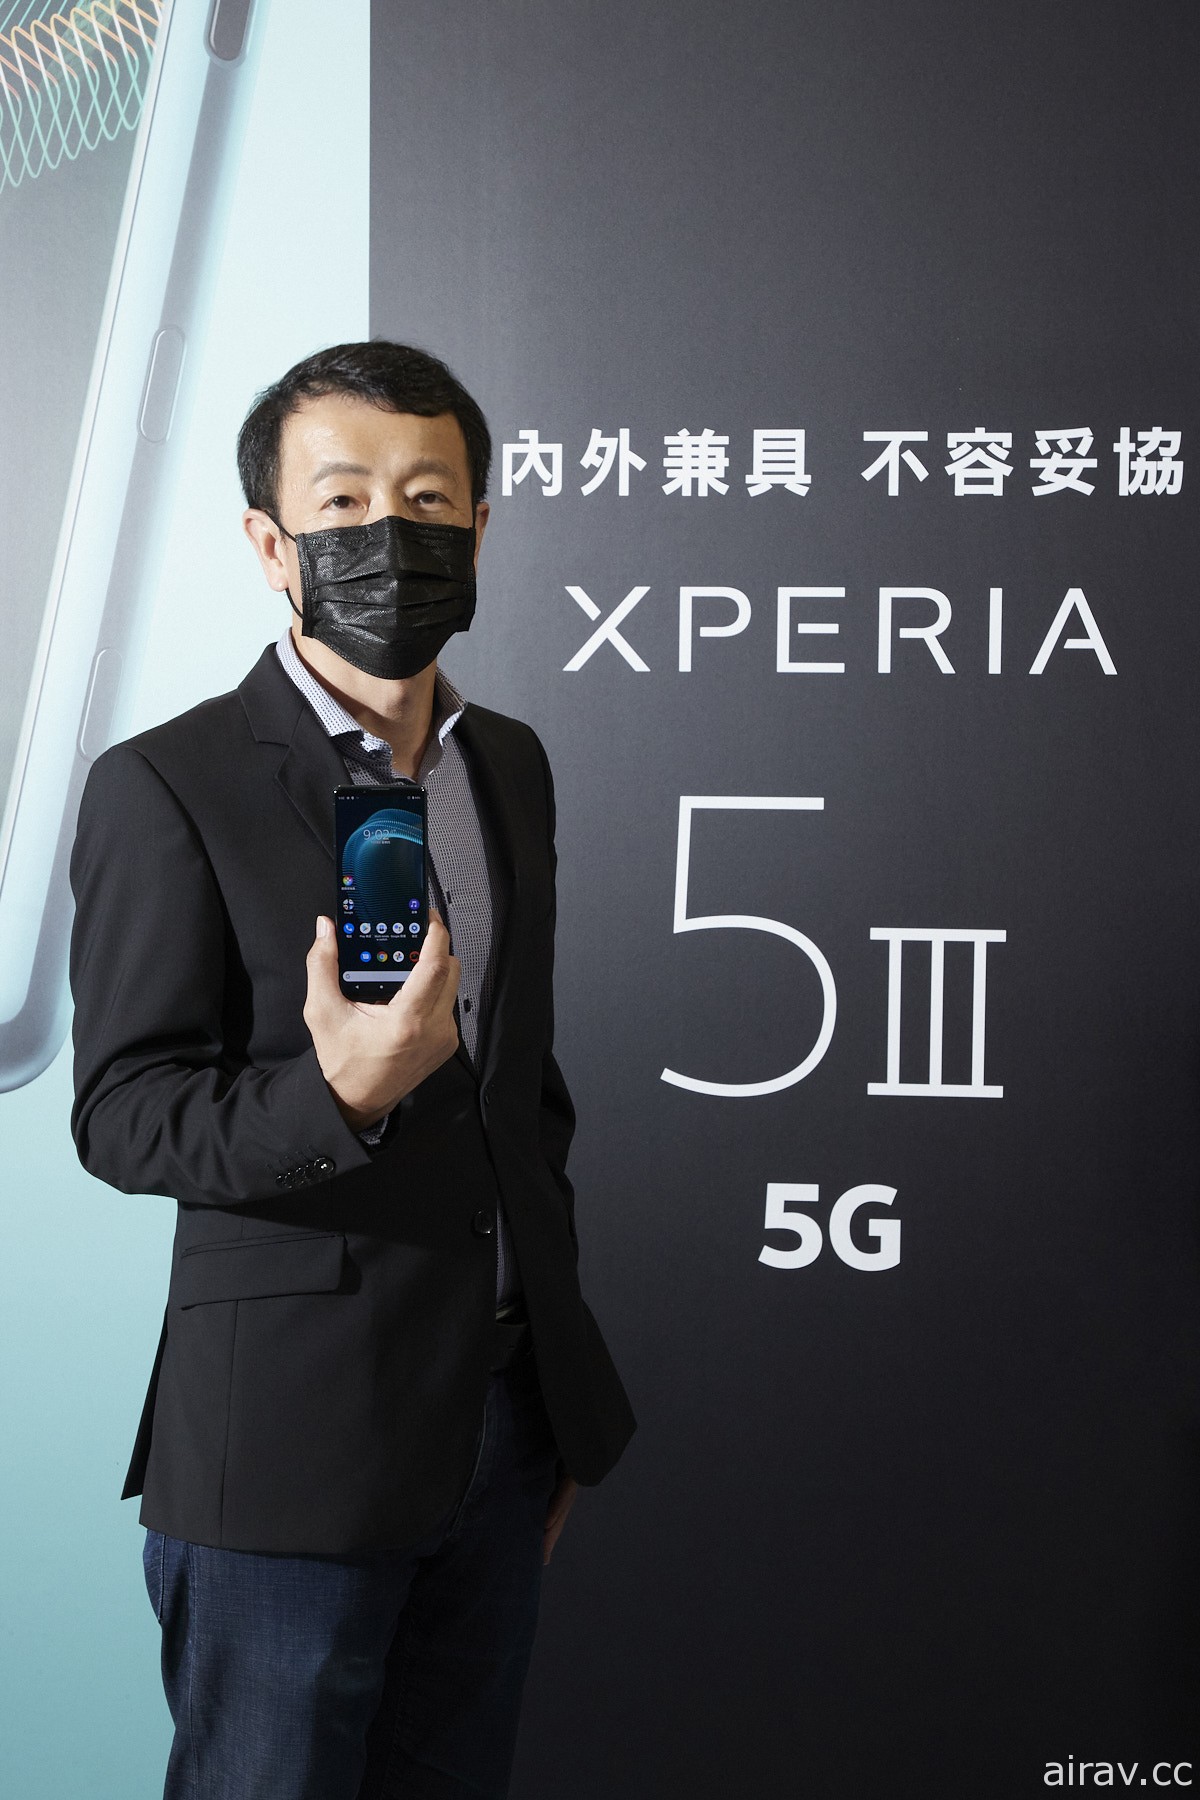 Sony Mobile 發表 Xperia 5 III 旗艦手機 預告 9 月 10 日開始預購